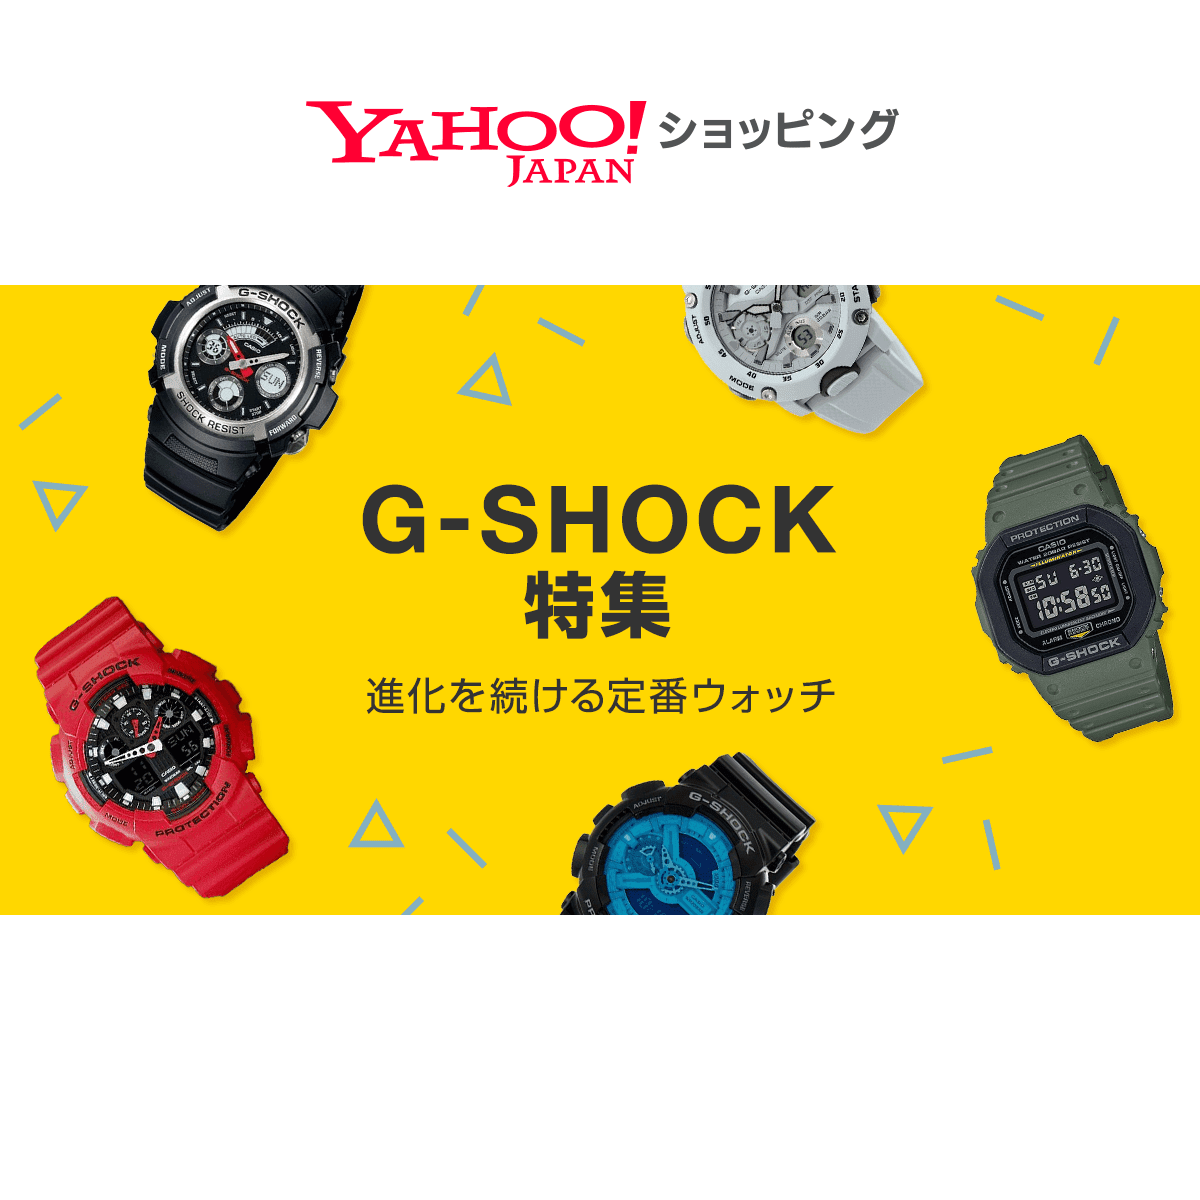 G-SHOCK 新作、限定、コラボモデルも - Yahoo!ショッピング